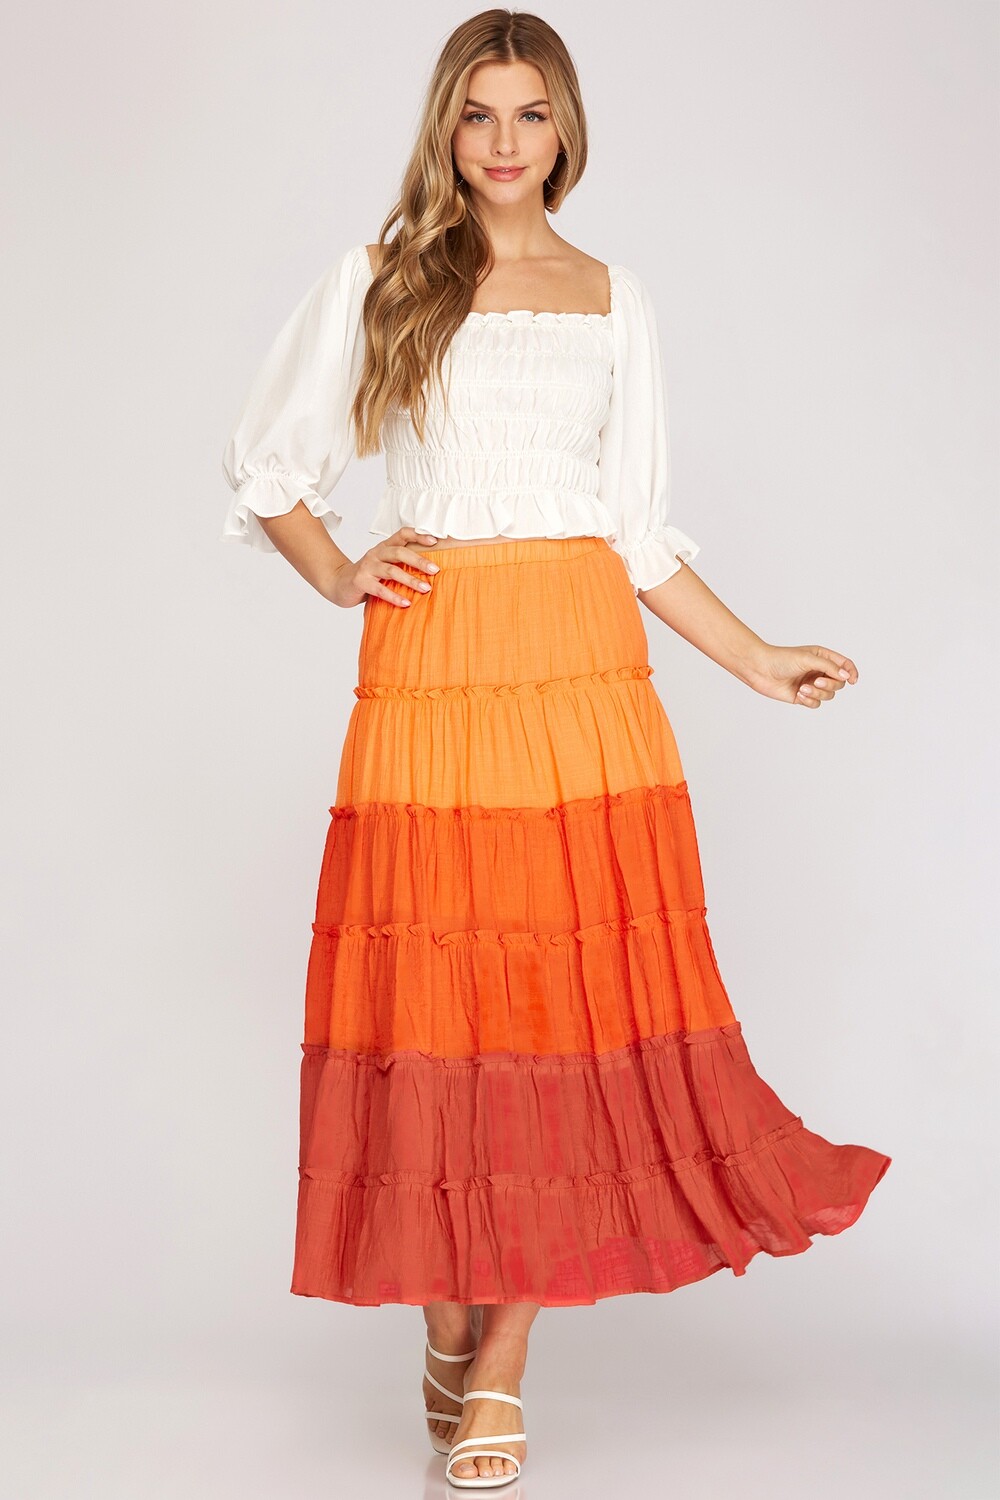 Orange long skirt SY3539, Size: S